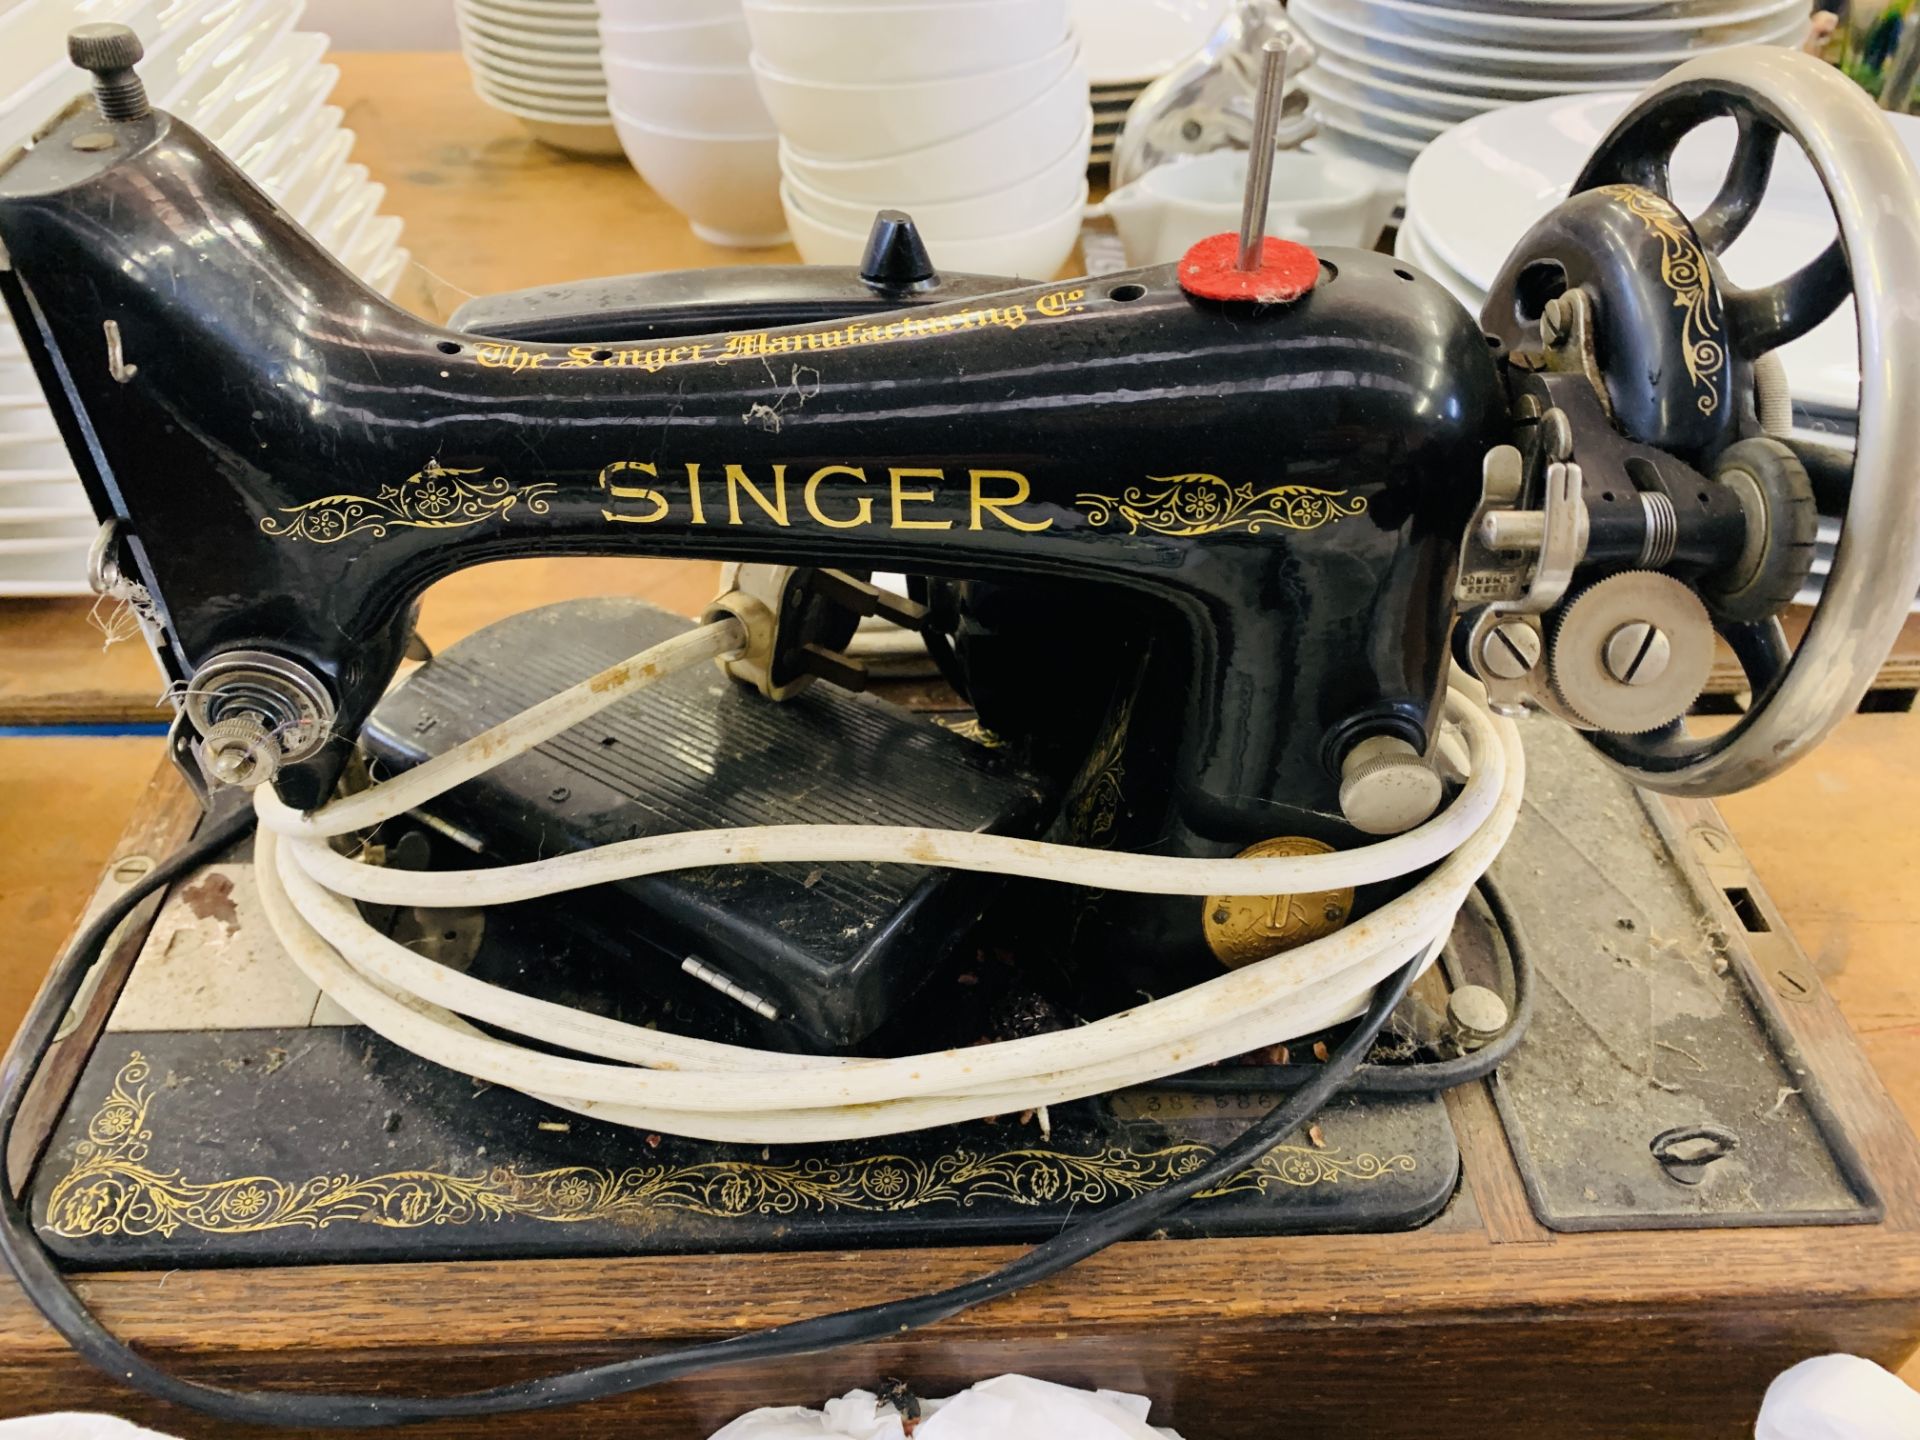 Singer 3835864 electric sewing machine.